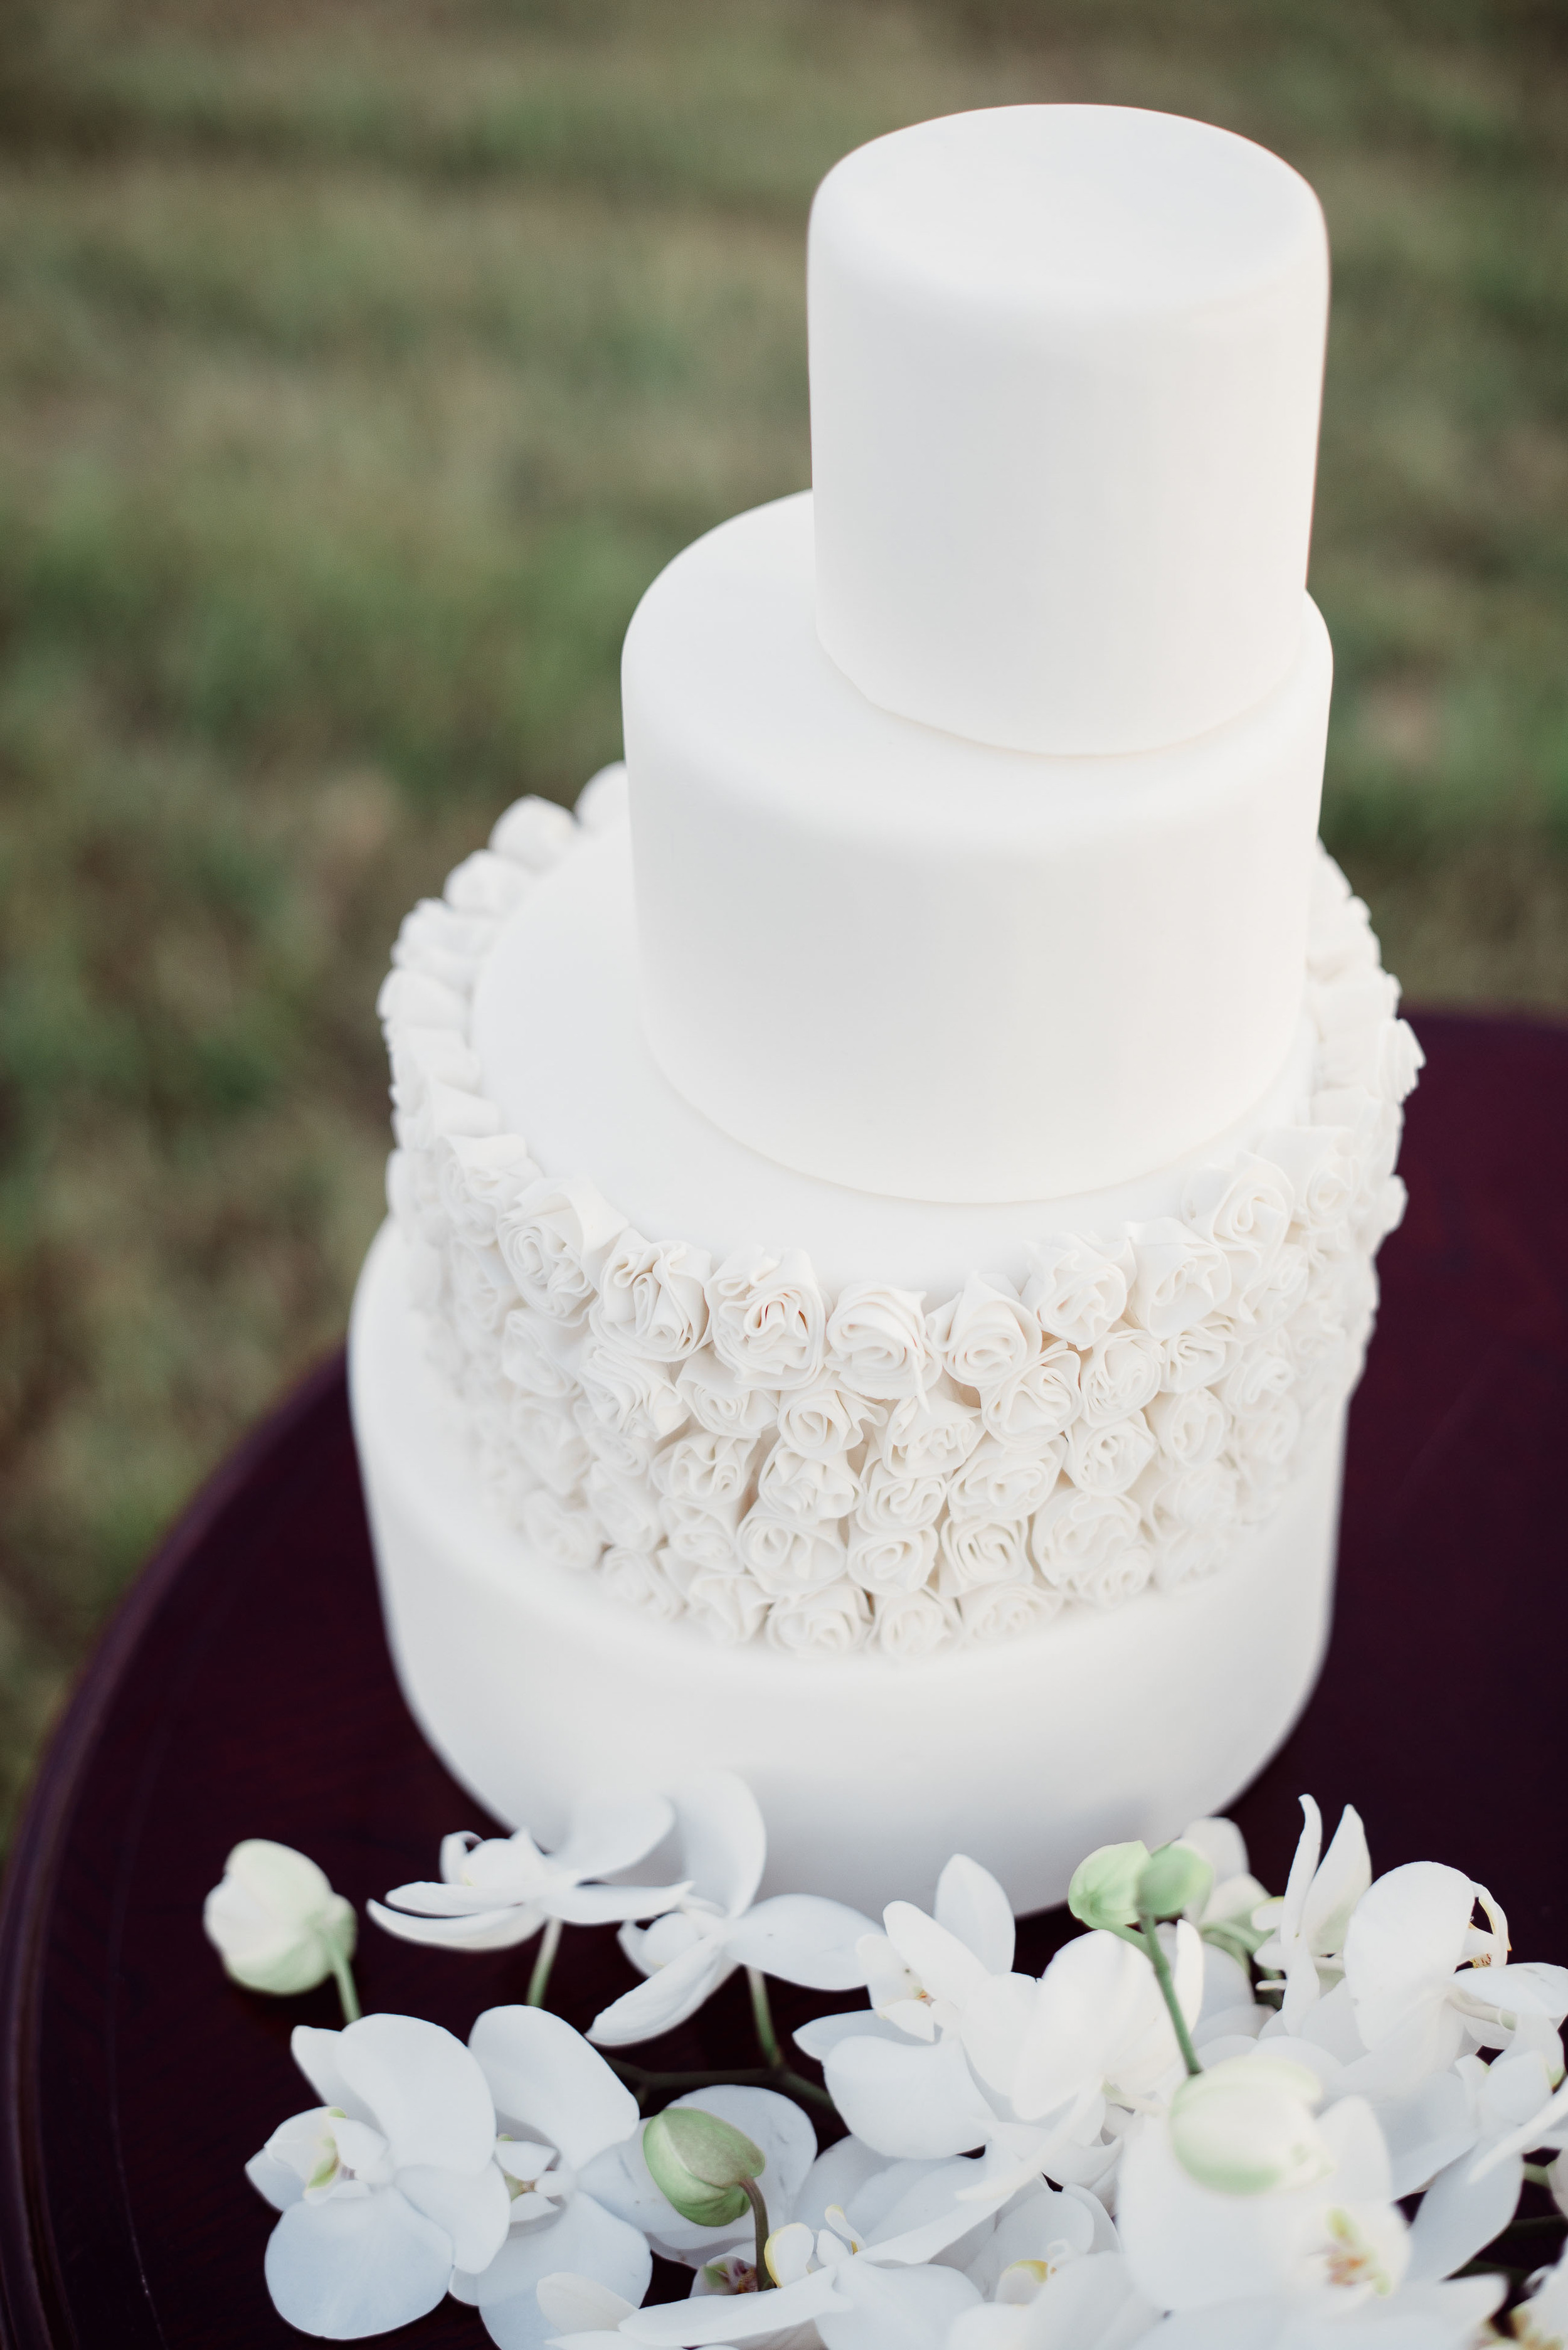 niagara-wedding-cakes-sweet-celebrations-custom-cakes-014.JPG